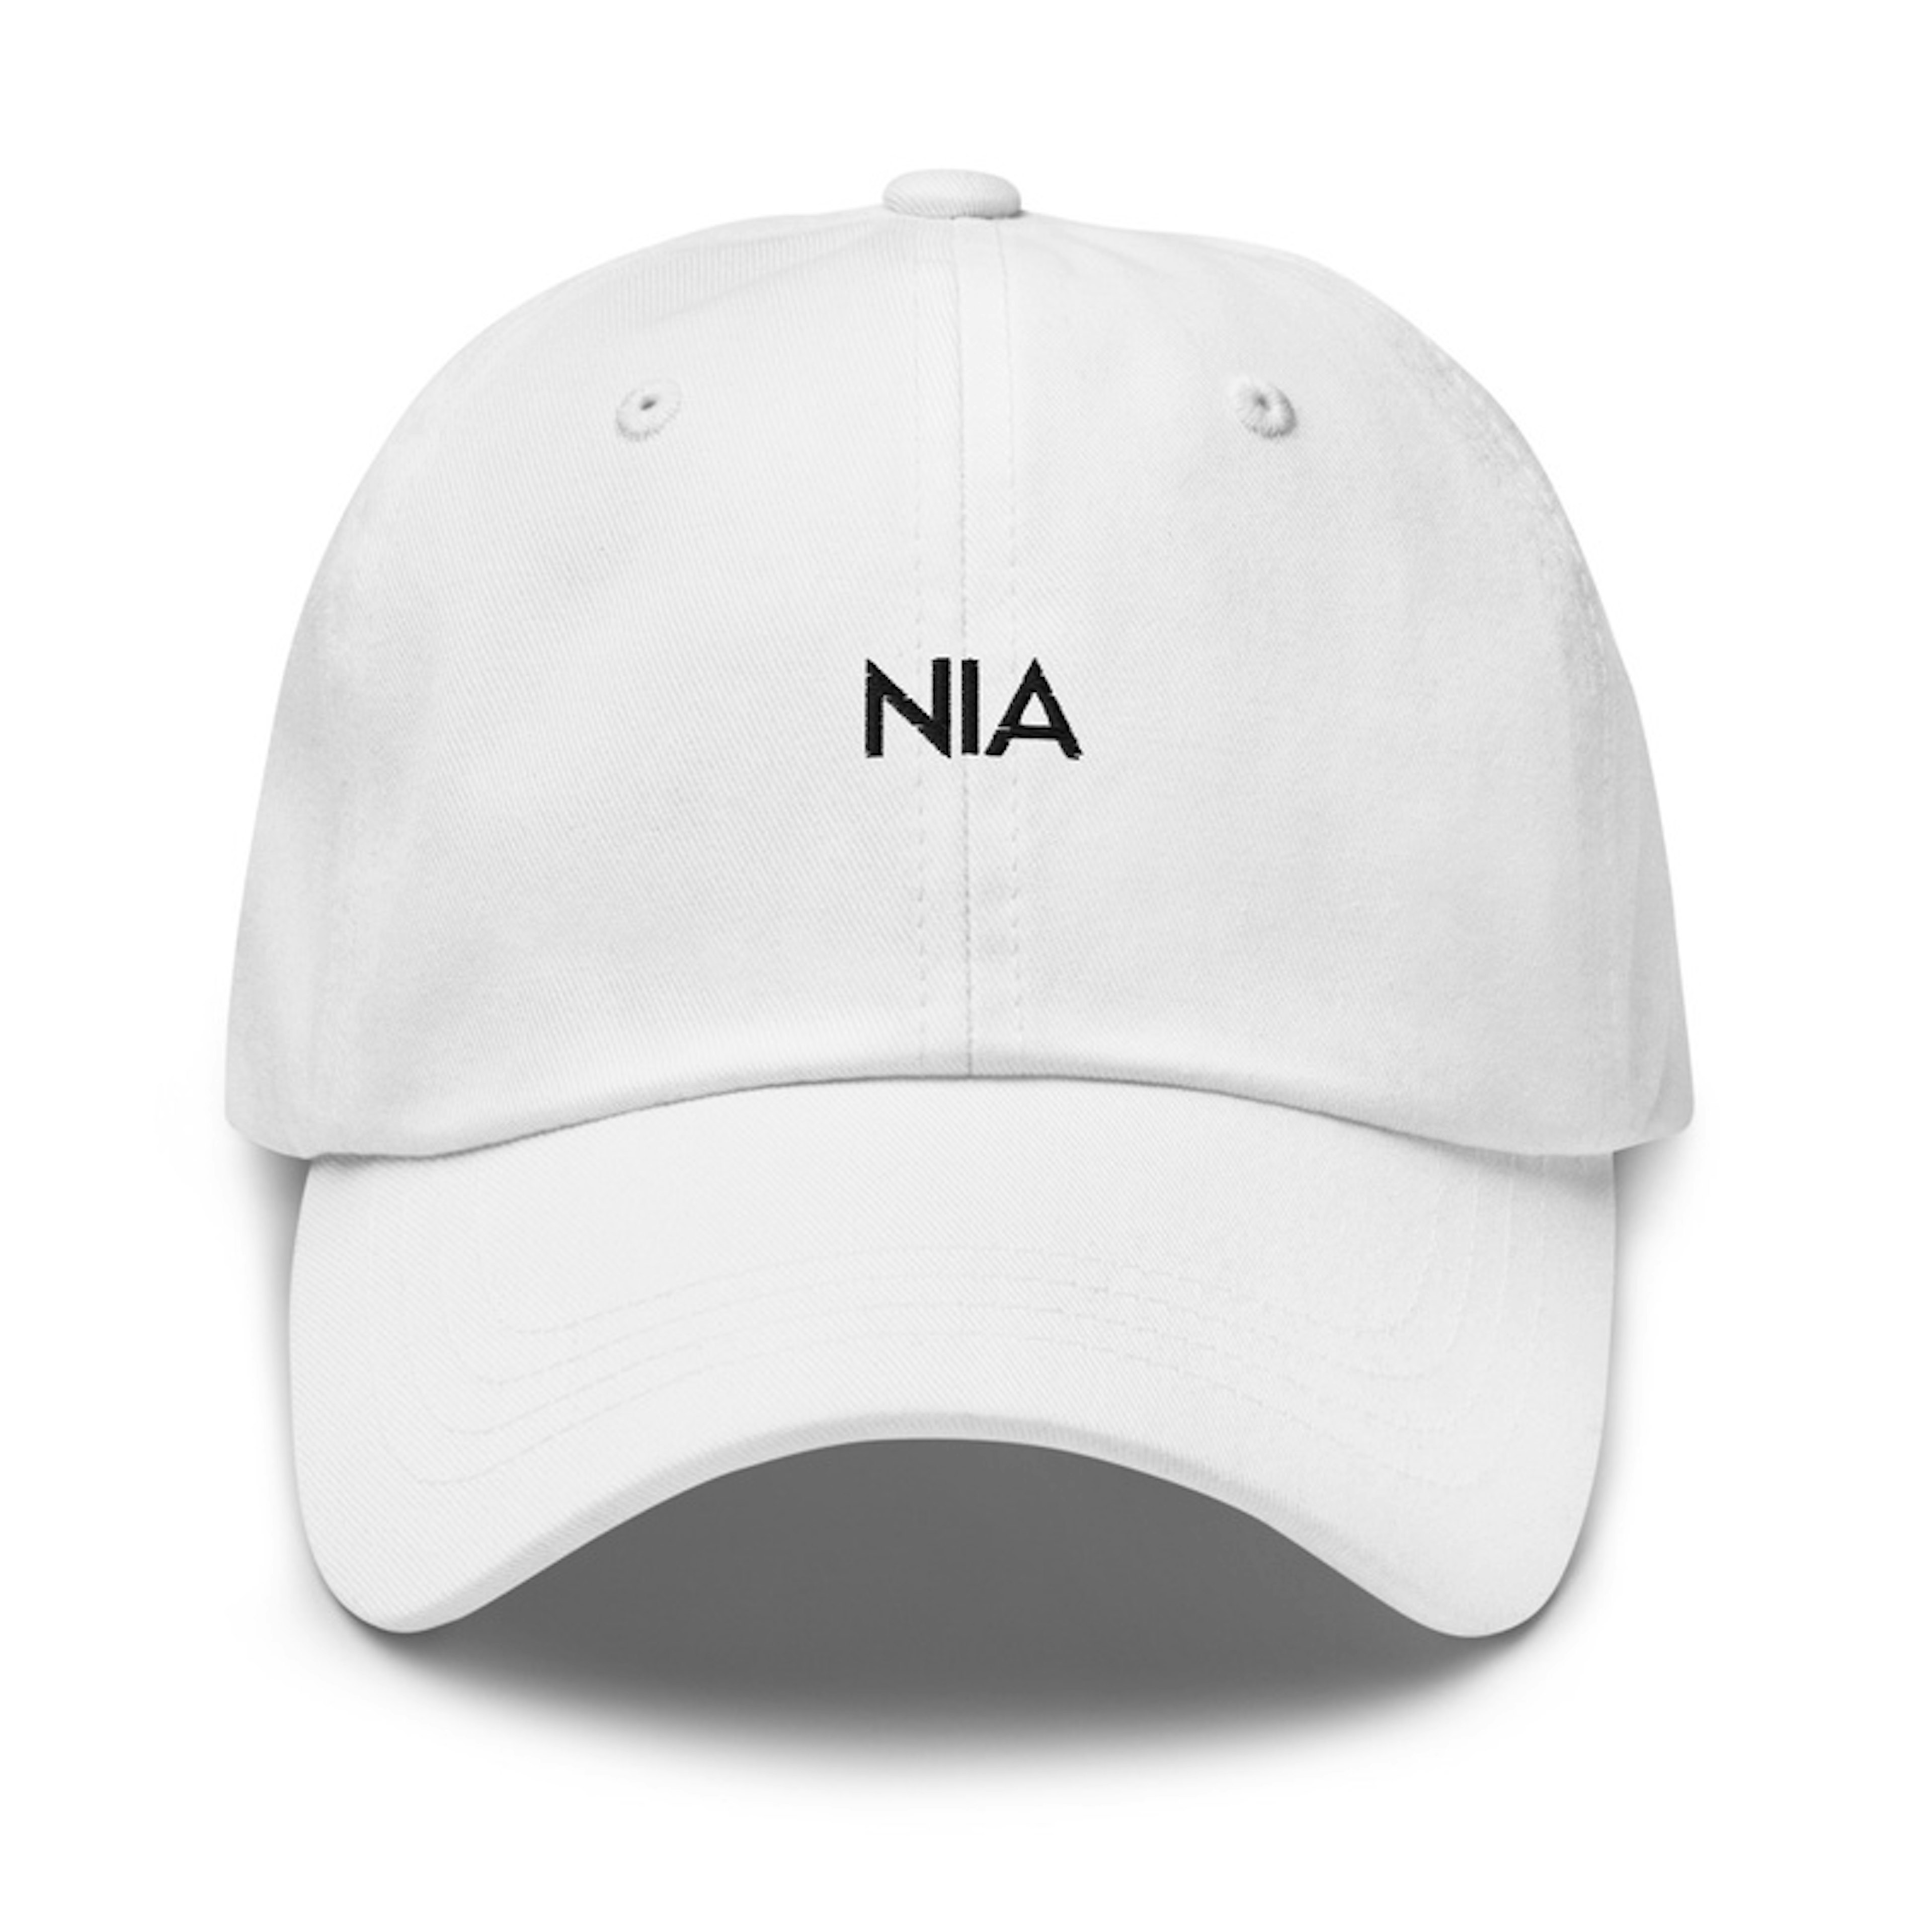 Nia Dinero "white hat" collection